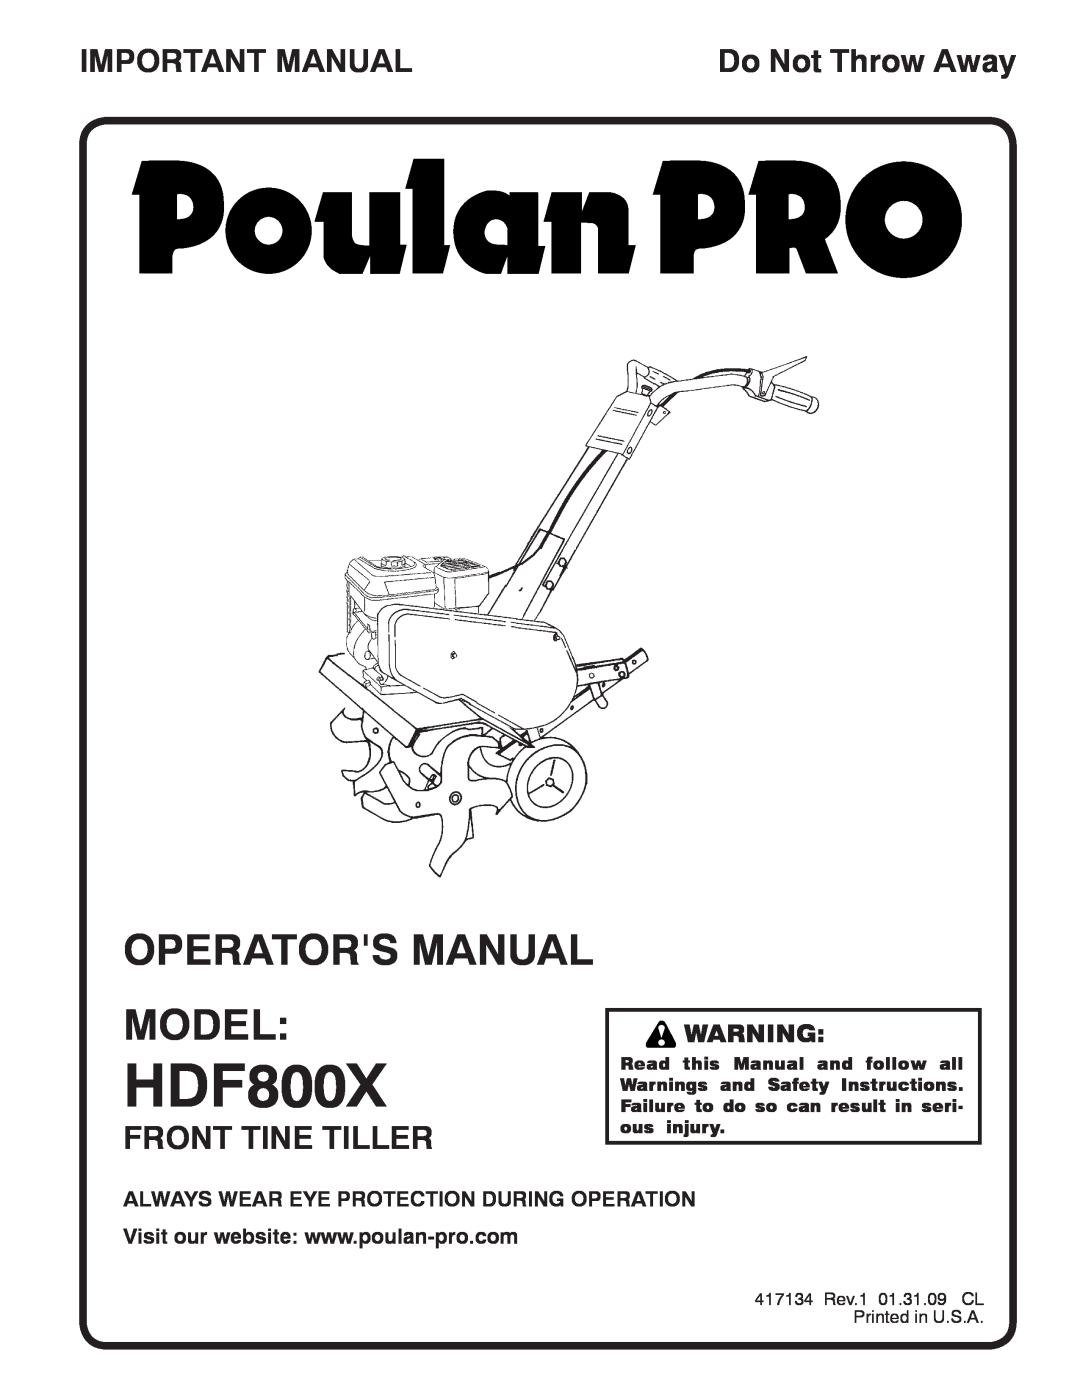 Poulan HDF800X manual Operators Manual Model, Important Manual, Front Tine Tiller, Do Not Throw Away 